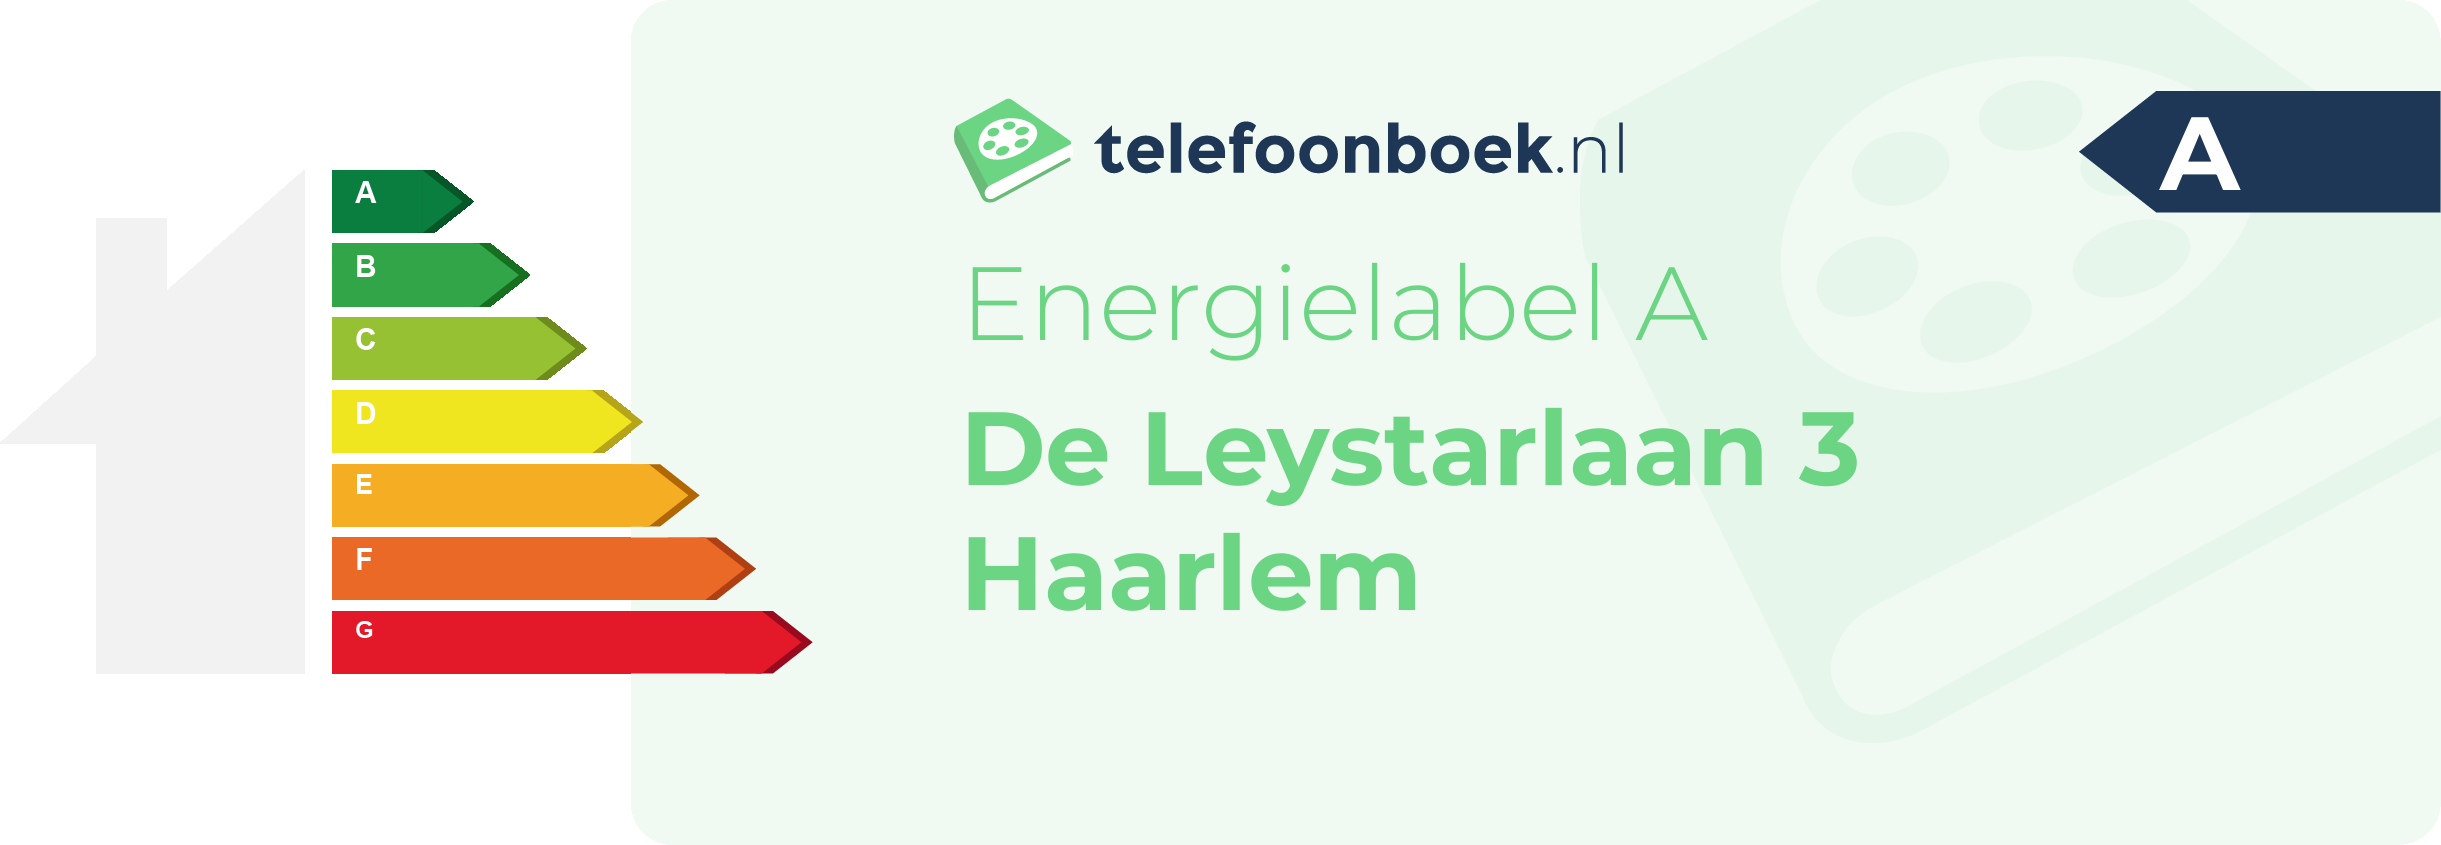 Energielabel De Leystarlaan 3 Haarlem